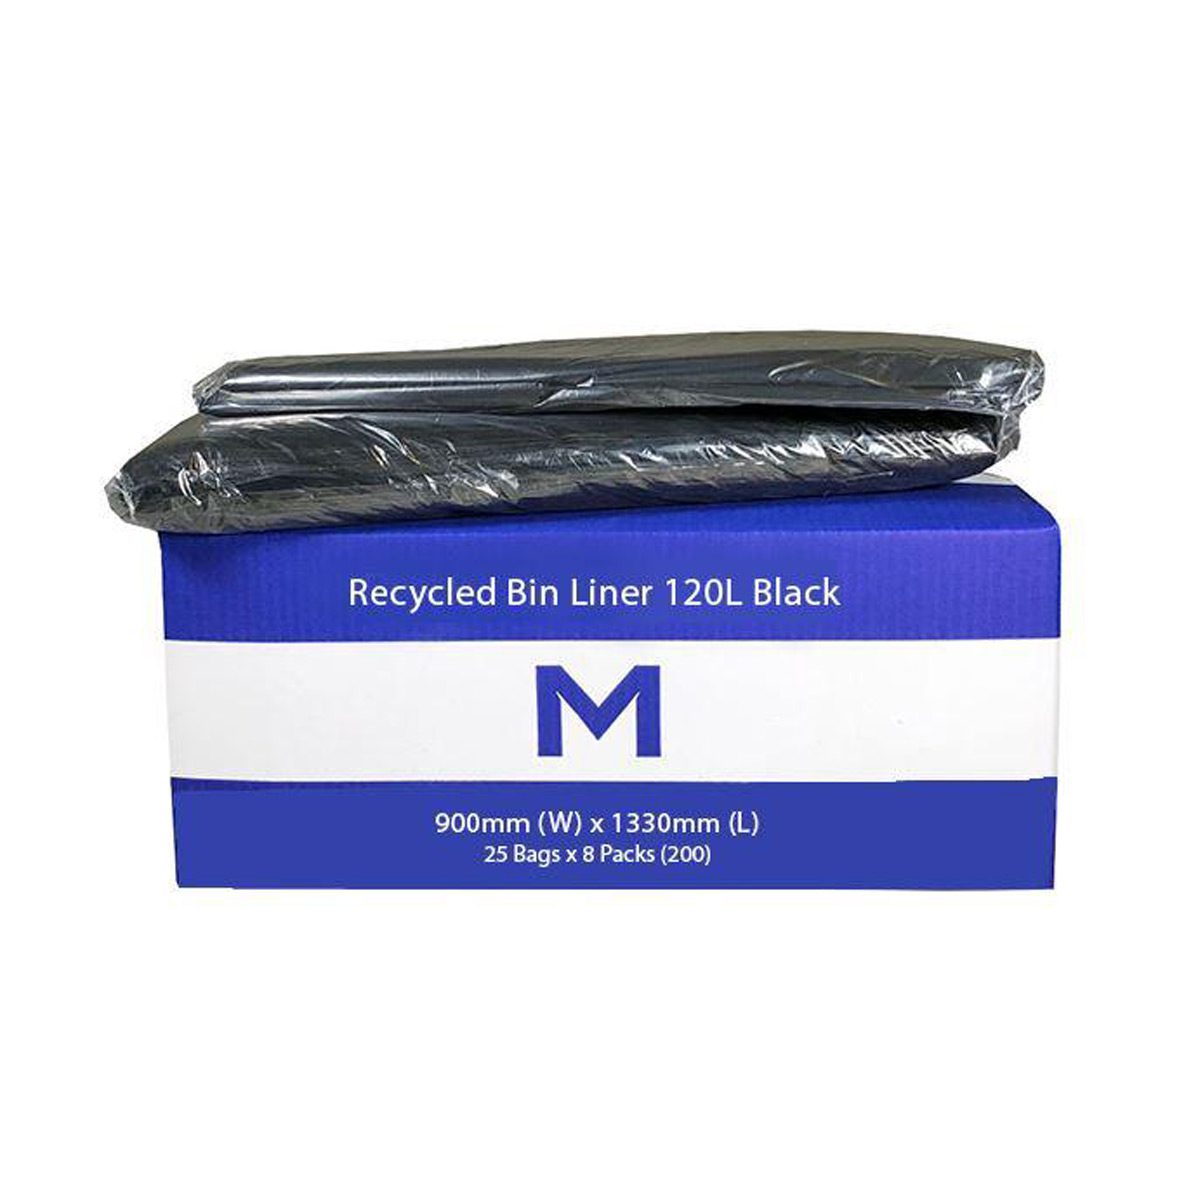 bins-bin-liners-bags-120L-litre-recycled-rubbish-bin-liners-25-bags-x-8-packs-200-bags-900mm-wide-x-1330mm-length-vjs-distributors-RB120LB